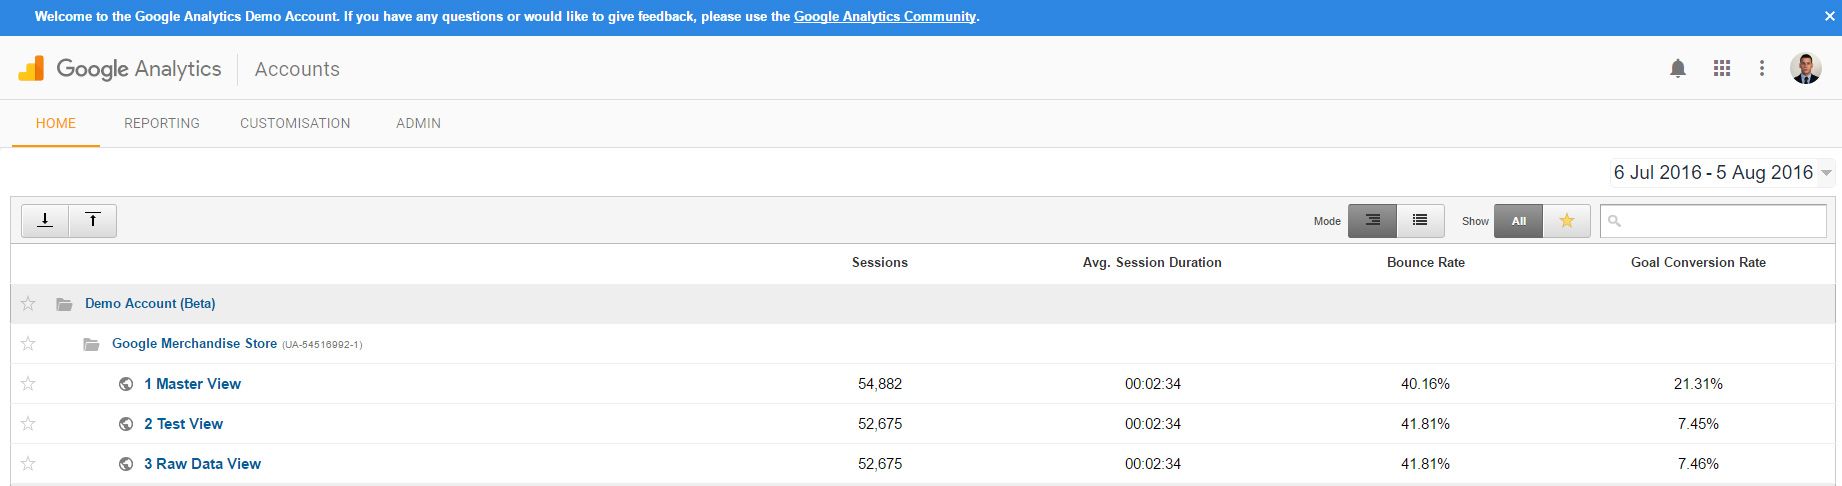 google analytics demo